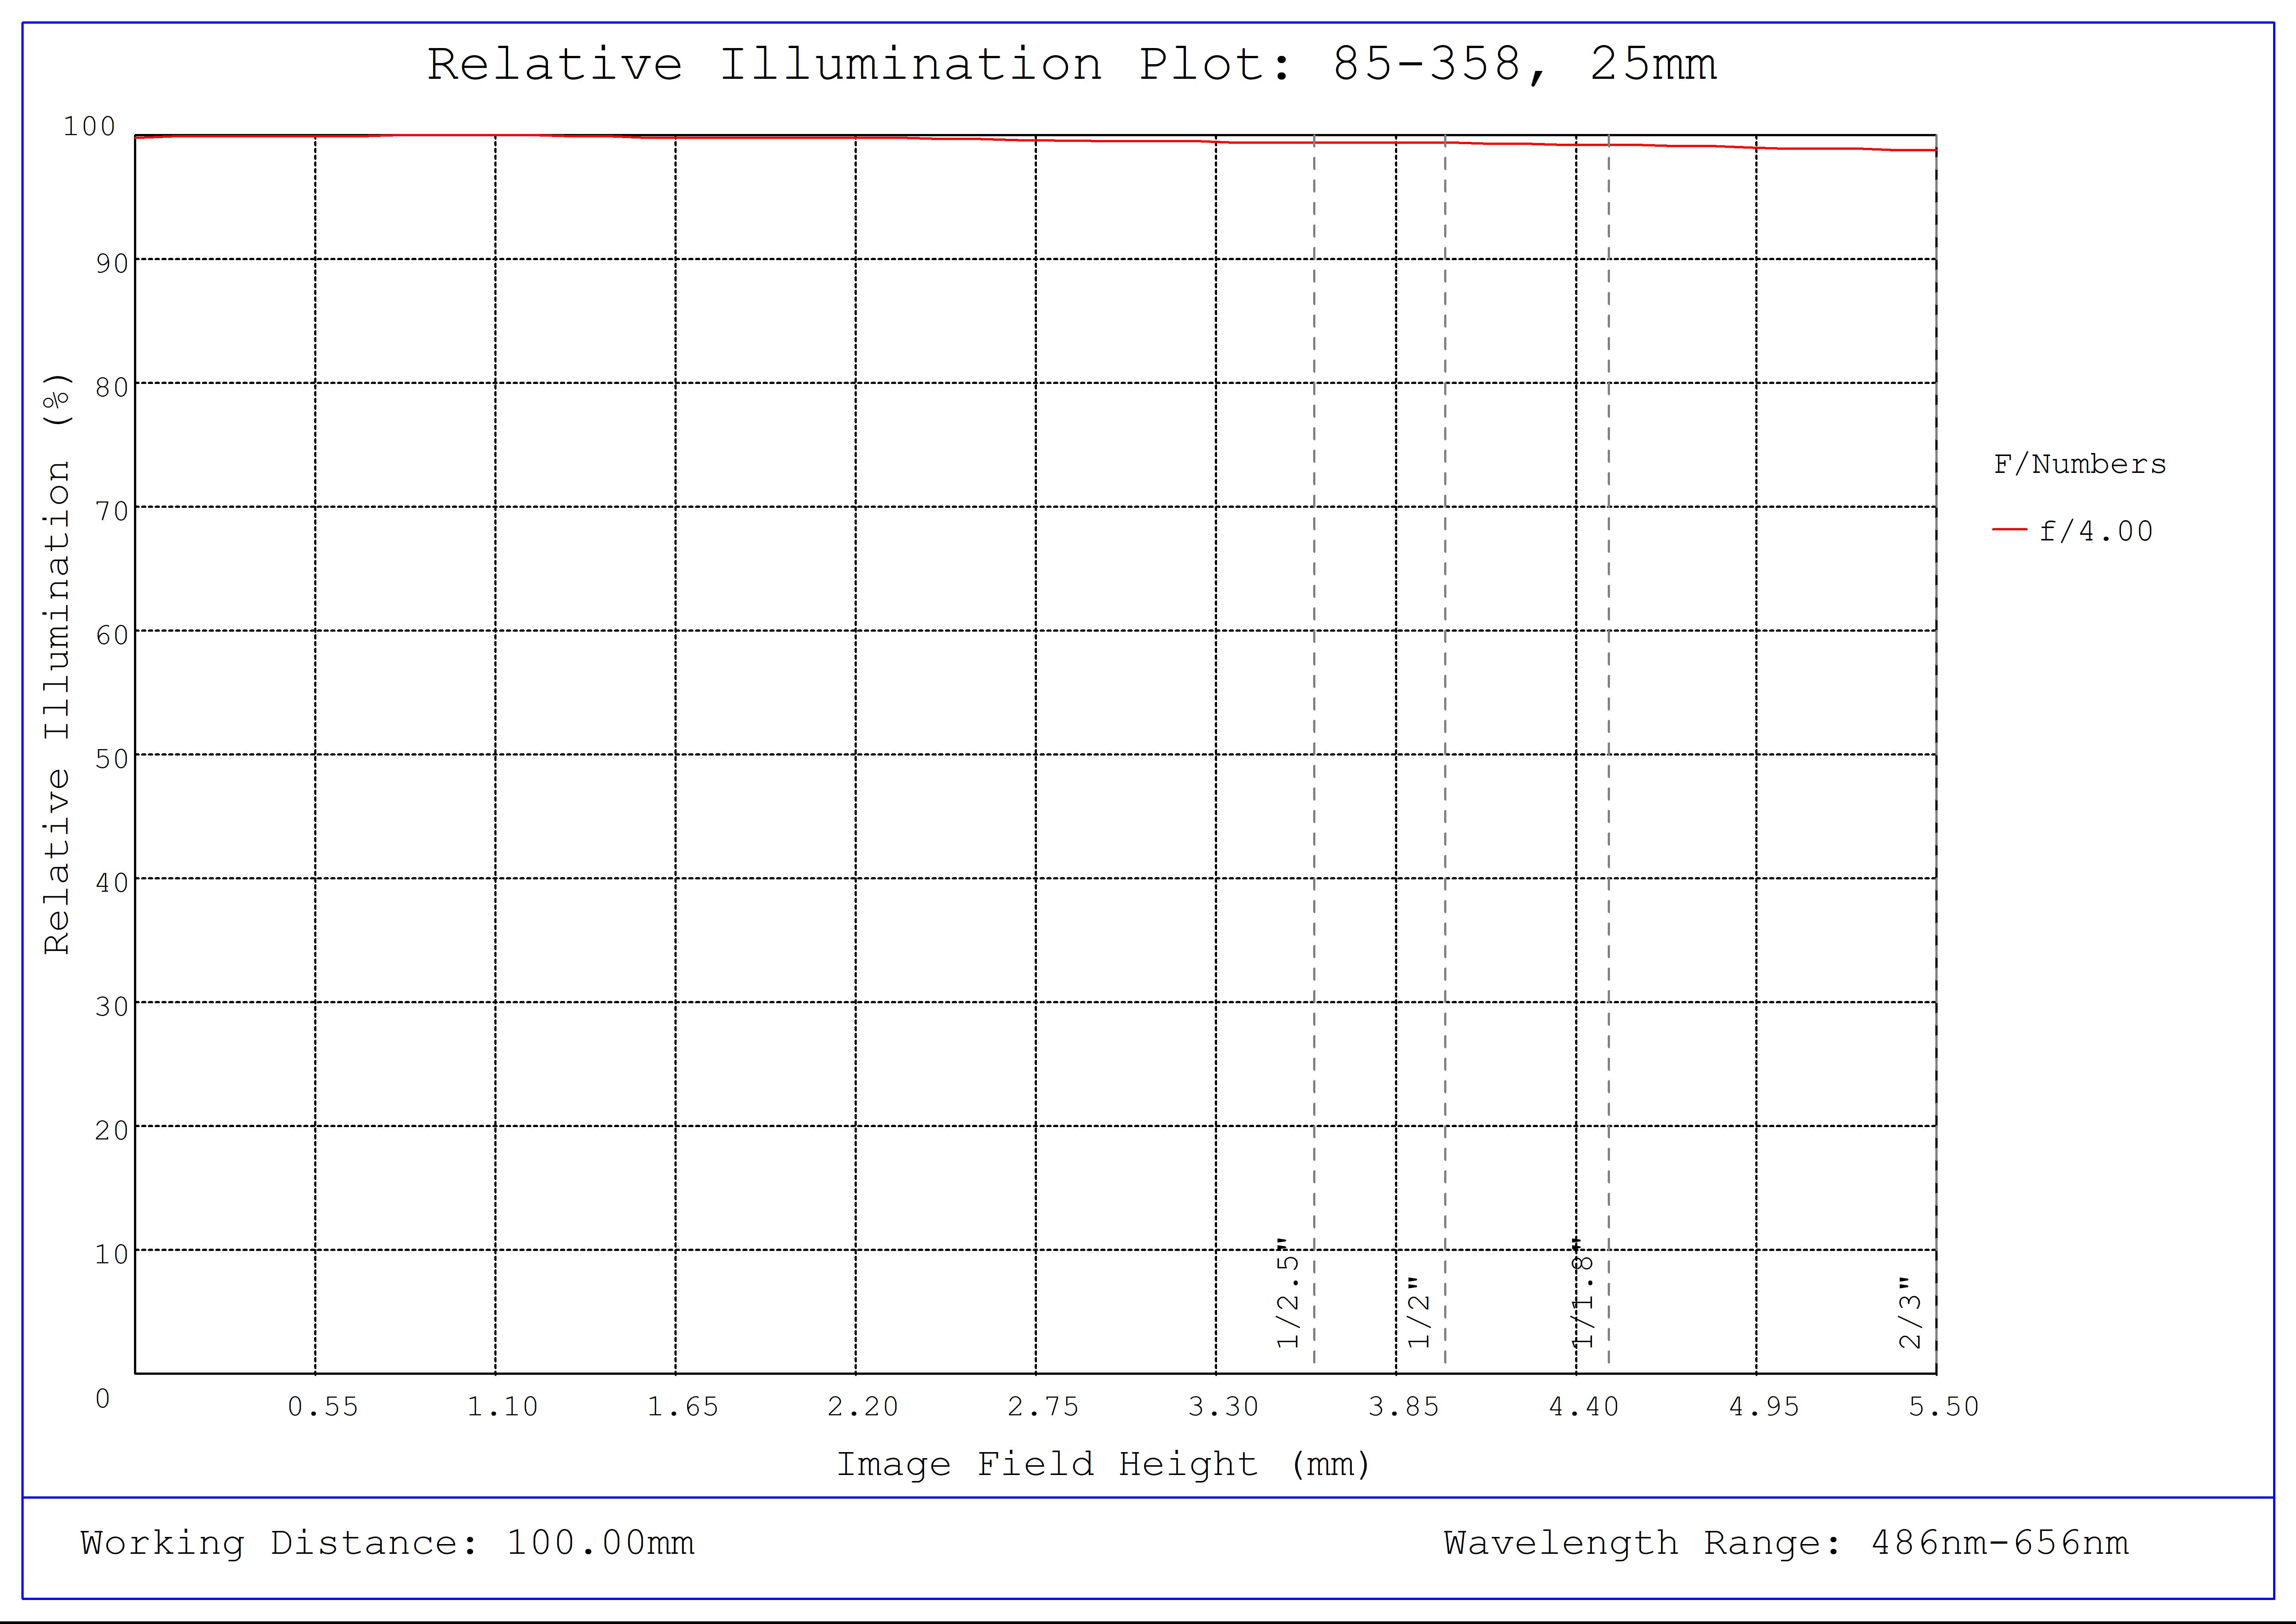 #85-358, 25mm, f/4 Ci Series Fixed Focal Length Lens, Relative Illumination Plot